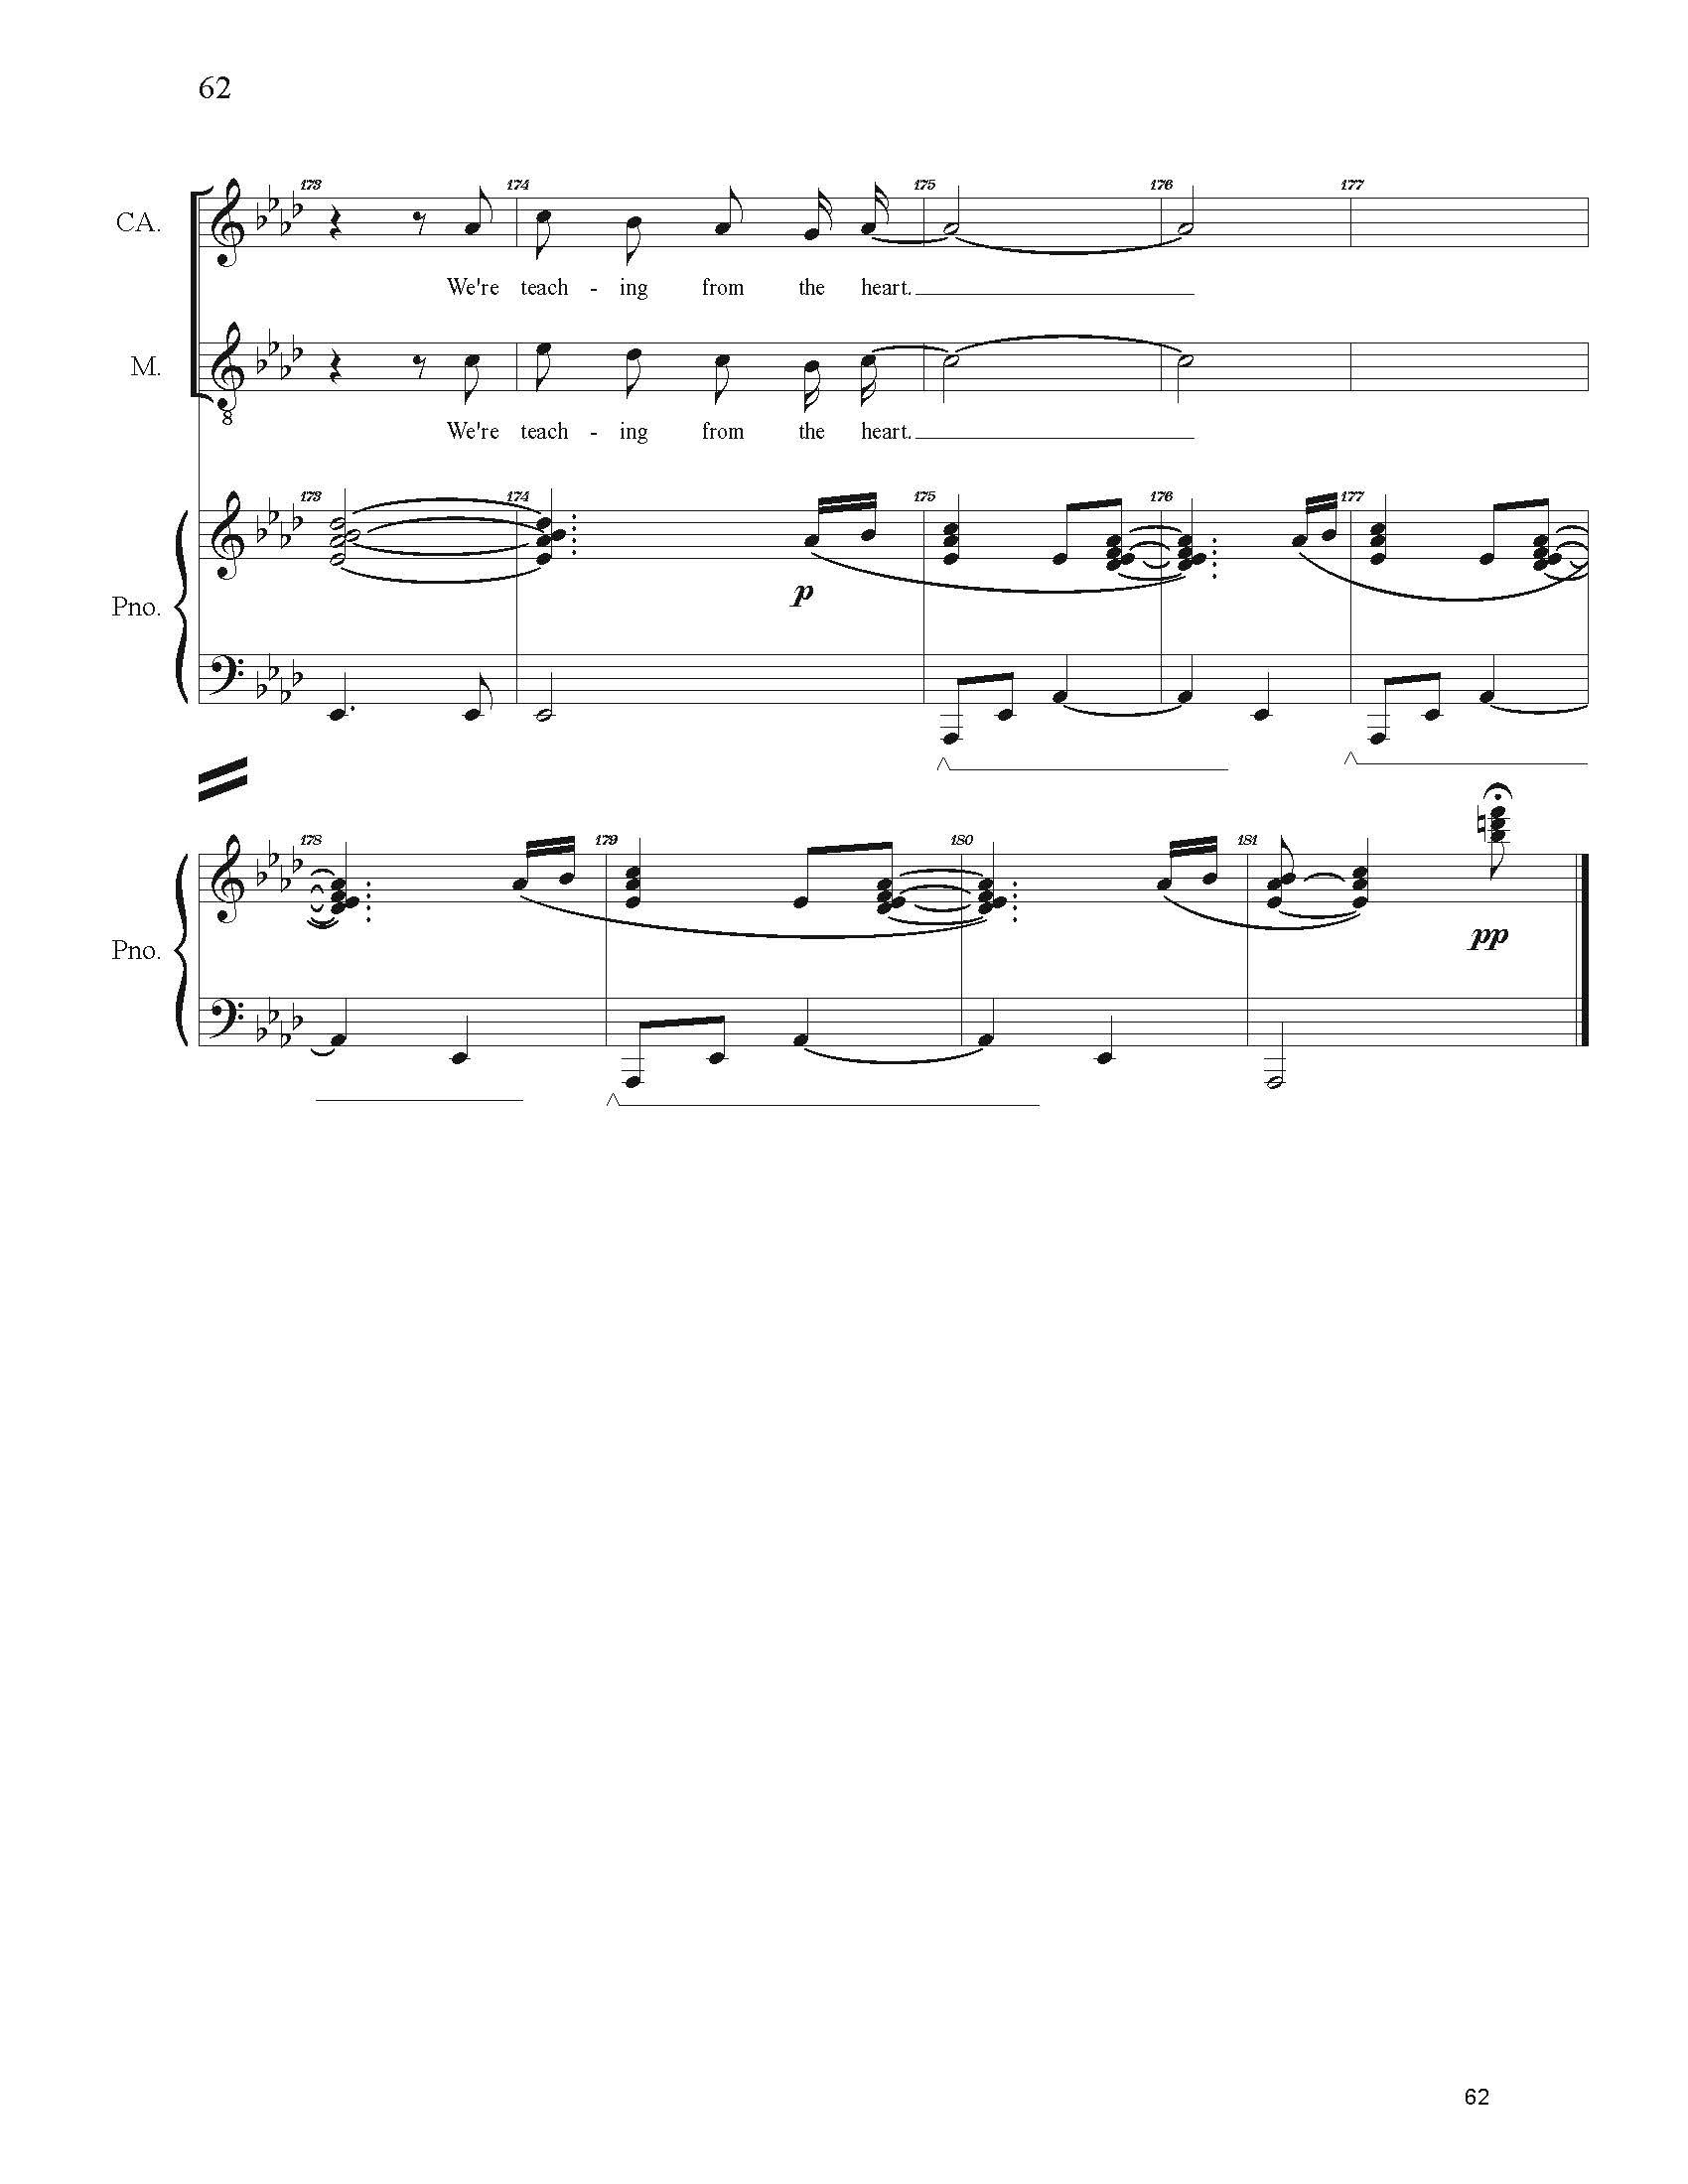 FULL PIANO VOCAL SCORE DRAFT 1 - Score_Page_062.jpg